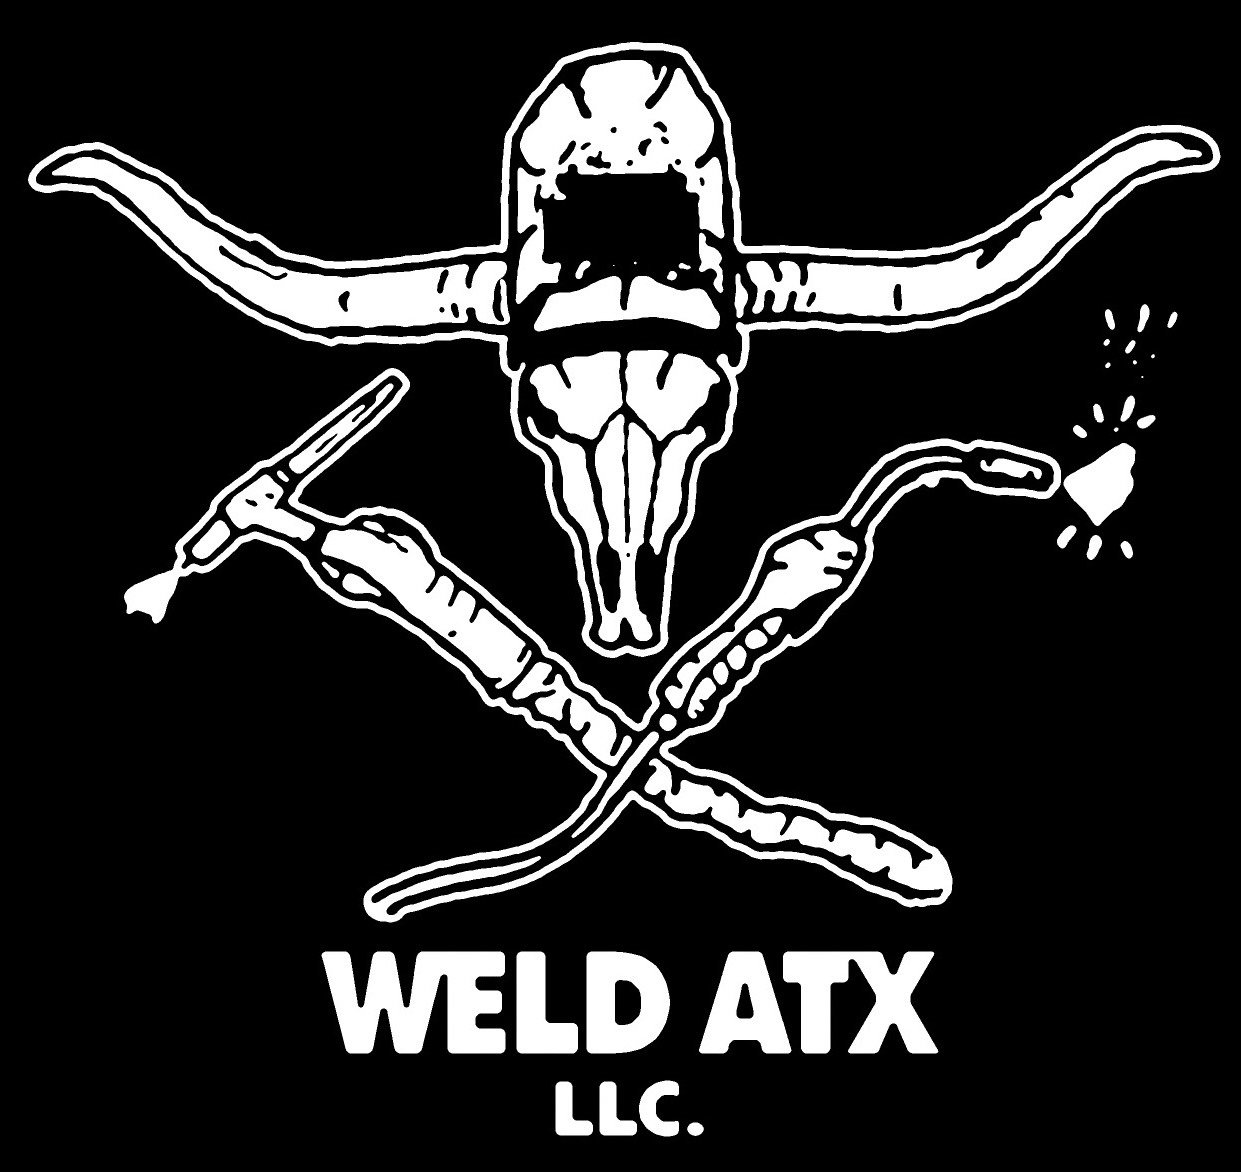 Weld ATX LLC